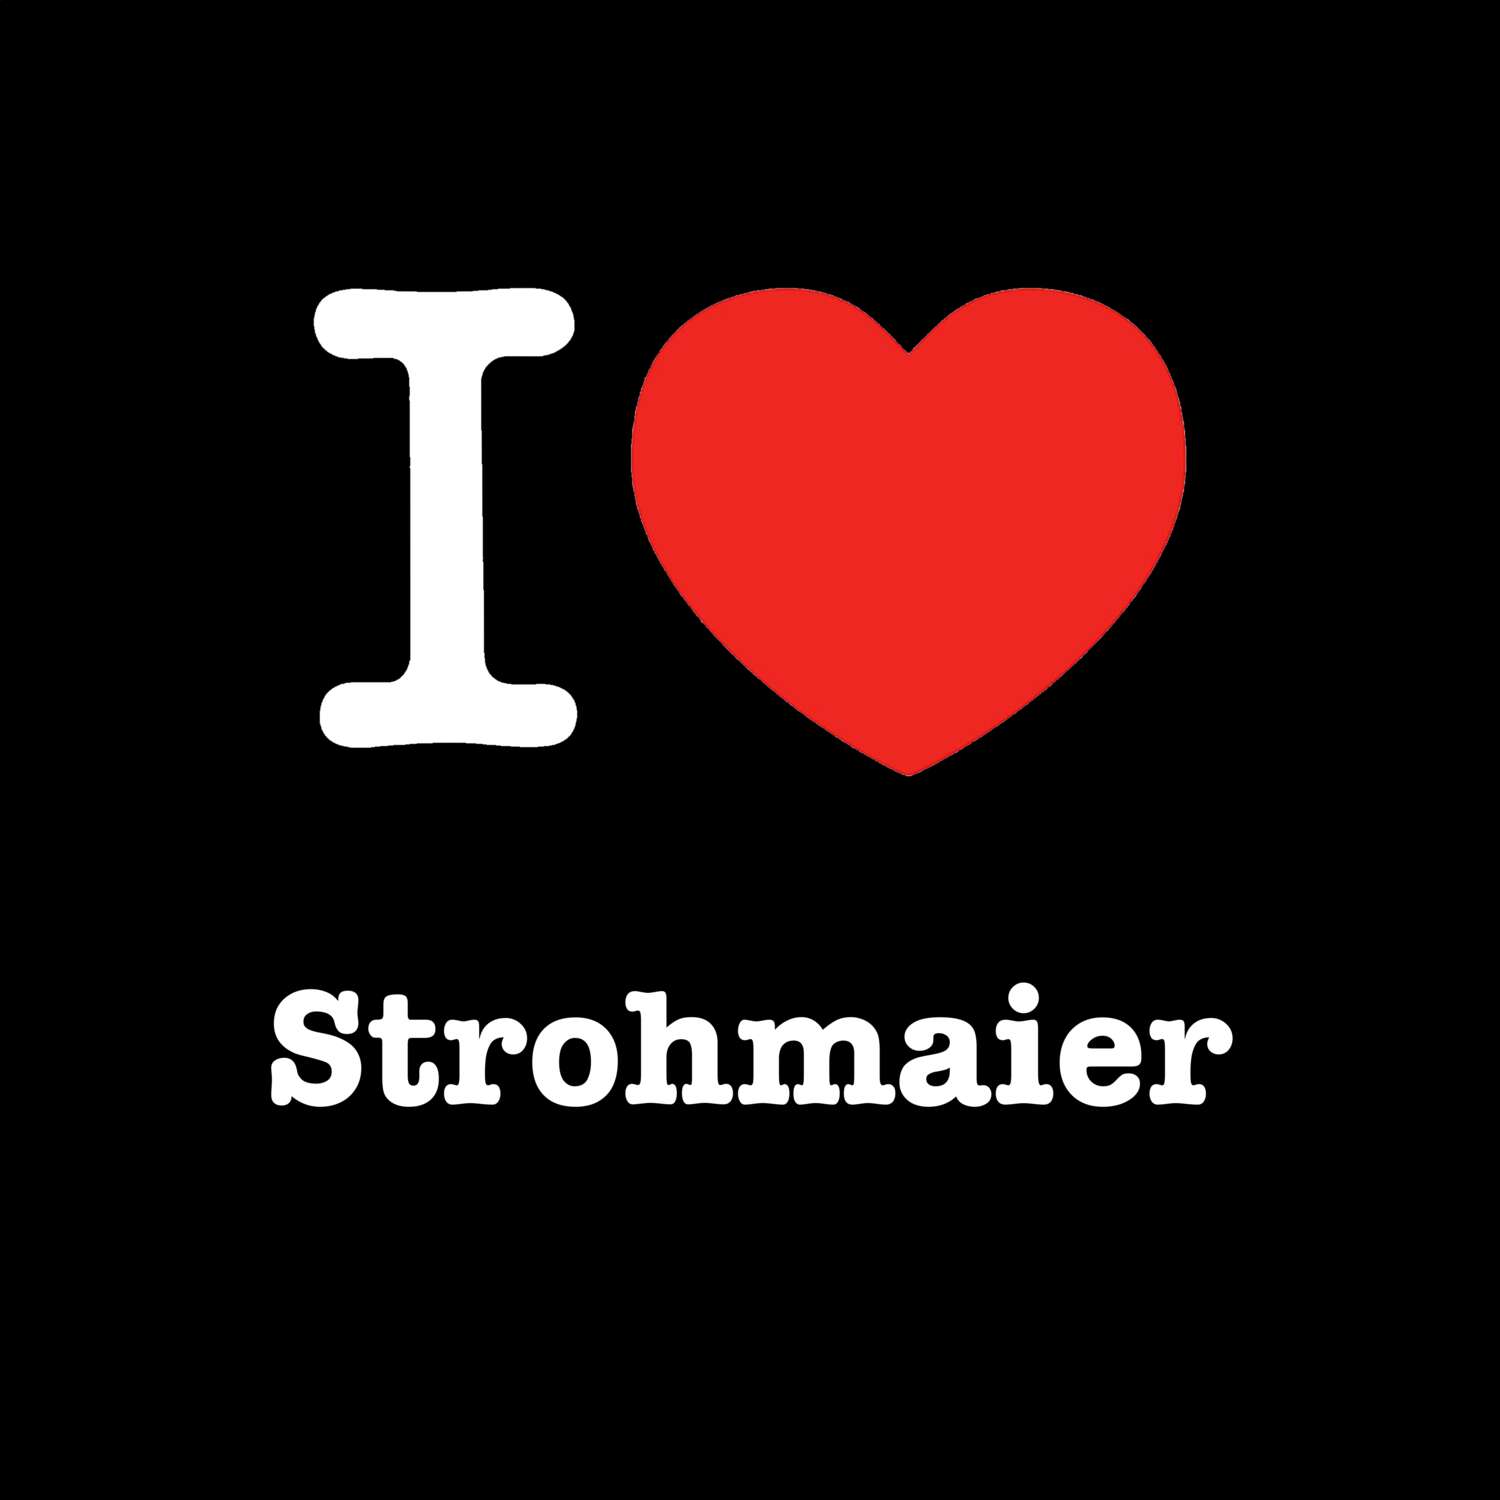 Strohmaier T-Shirt »I love«